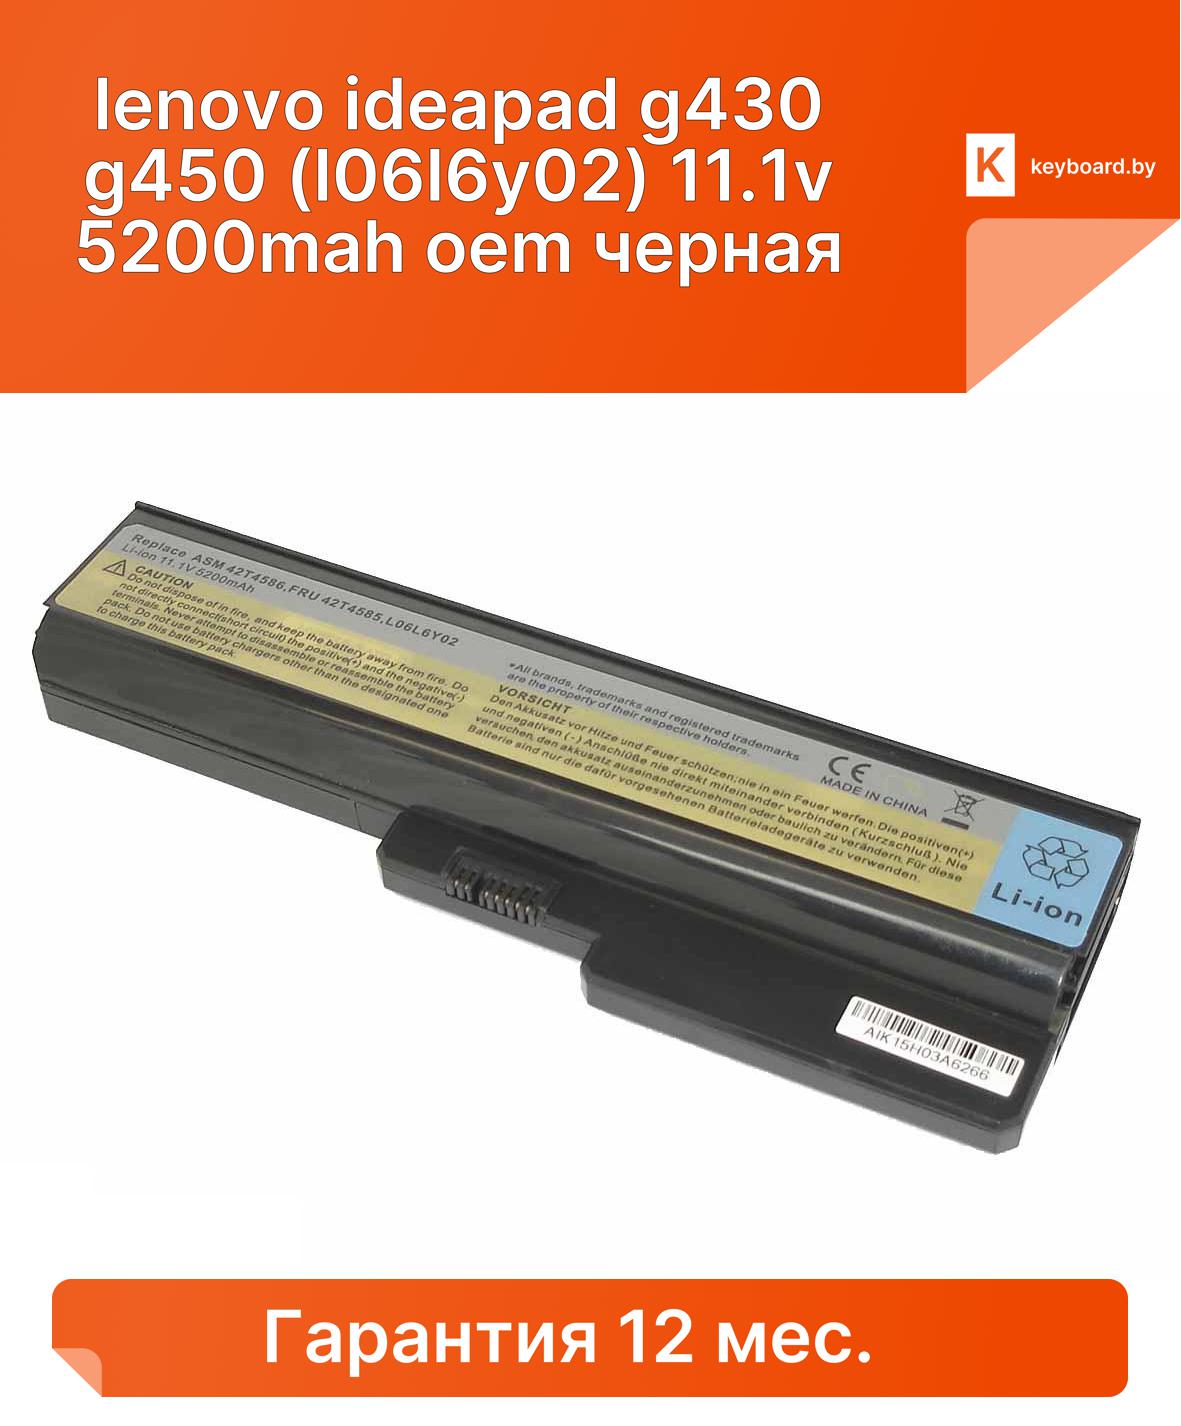 Аккумуляторная батарея для ноутбука lenovo ideapad g430 g450 (l06l6y02) 11.1v 5200mah oem черная